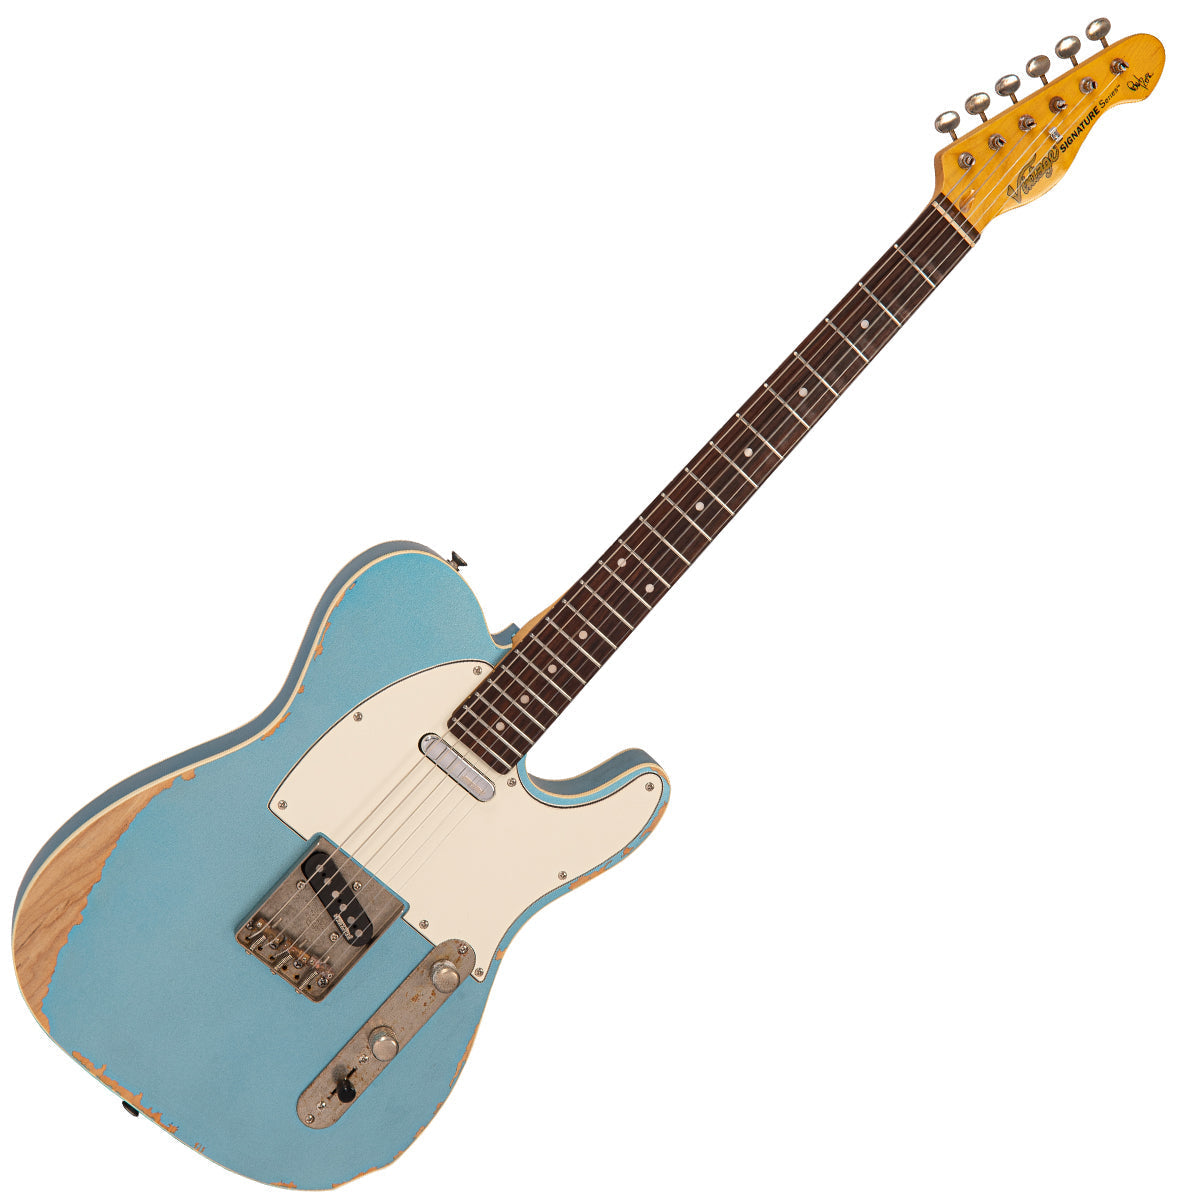 Vintage V66 Paul Rose Signature Electric Guitar ~ Distressed Gun Hill Blue, Electric Guitar for sale at Richards Guitars.